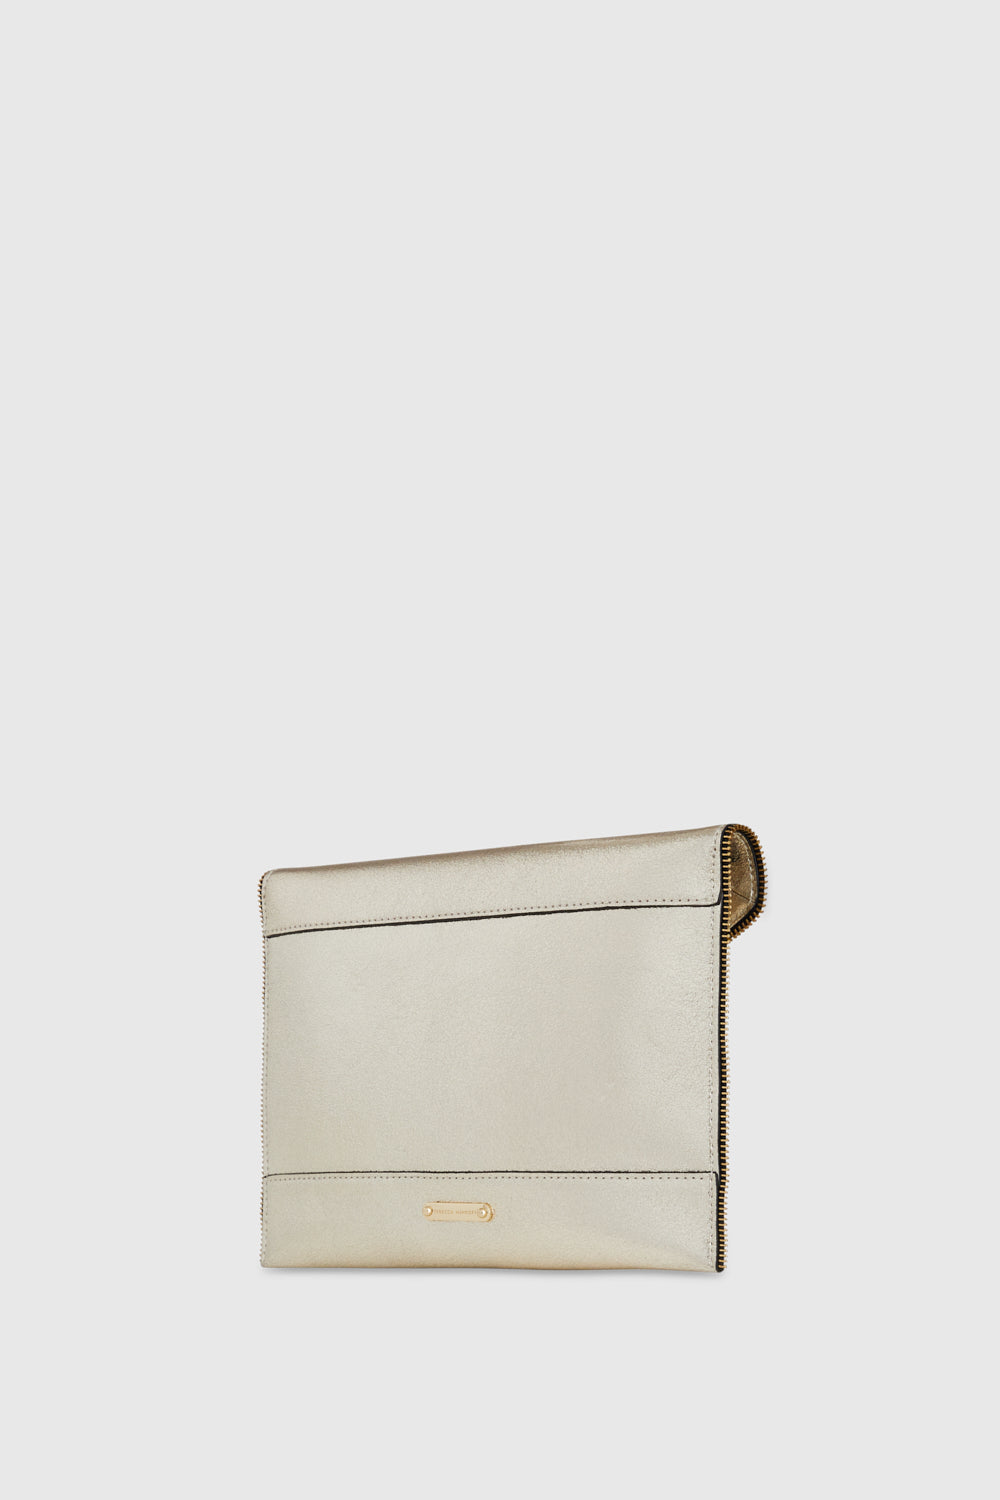 Rebecca Minkoff Cream Leather Envelope Clutch Bag - 7 1/2" X 10  1/2"